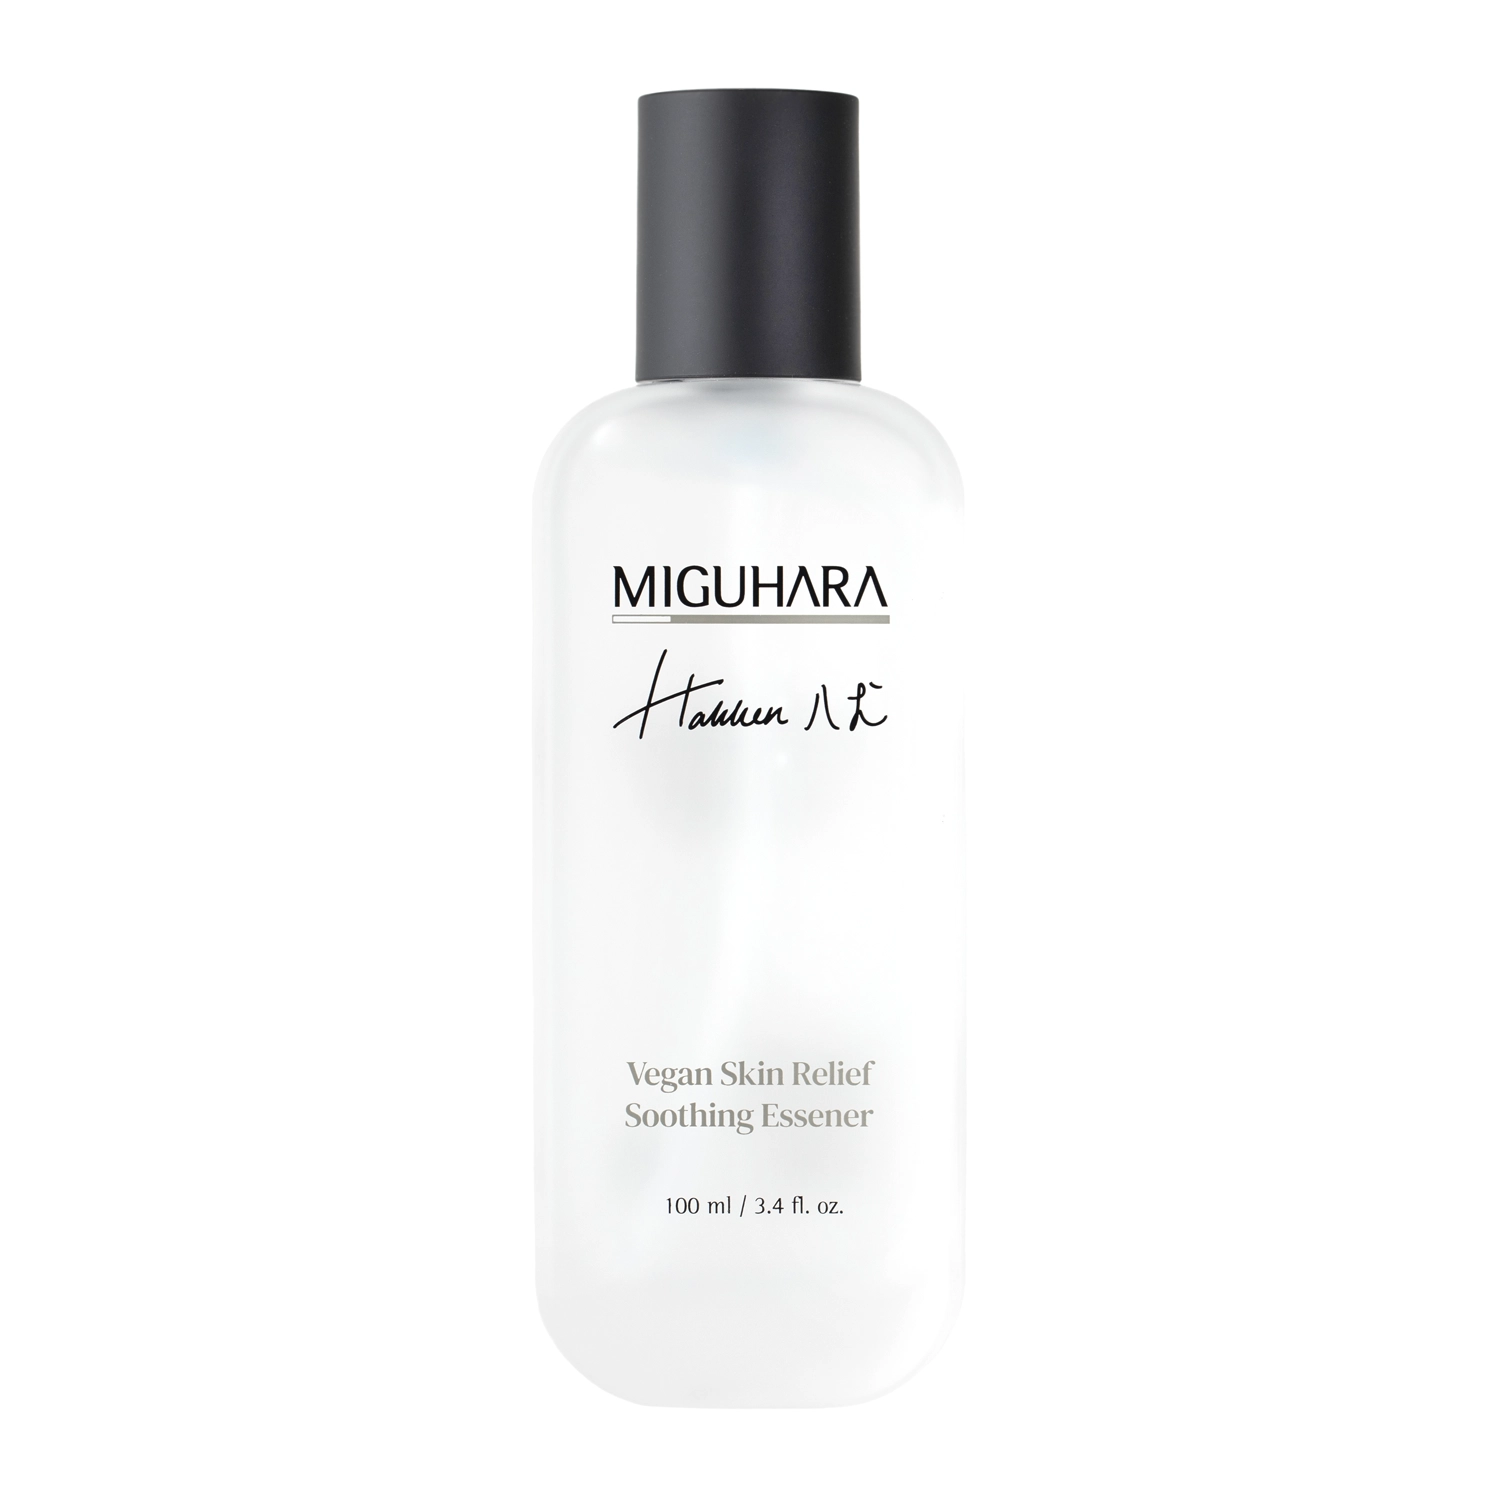 Miguhara - Vegan Skin Relief Soothing Essener - Успокаивающая эссенция для лица - 100ml